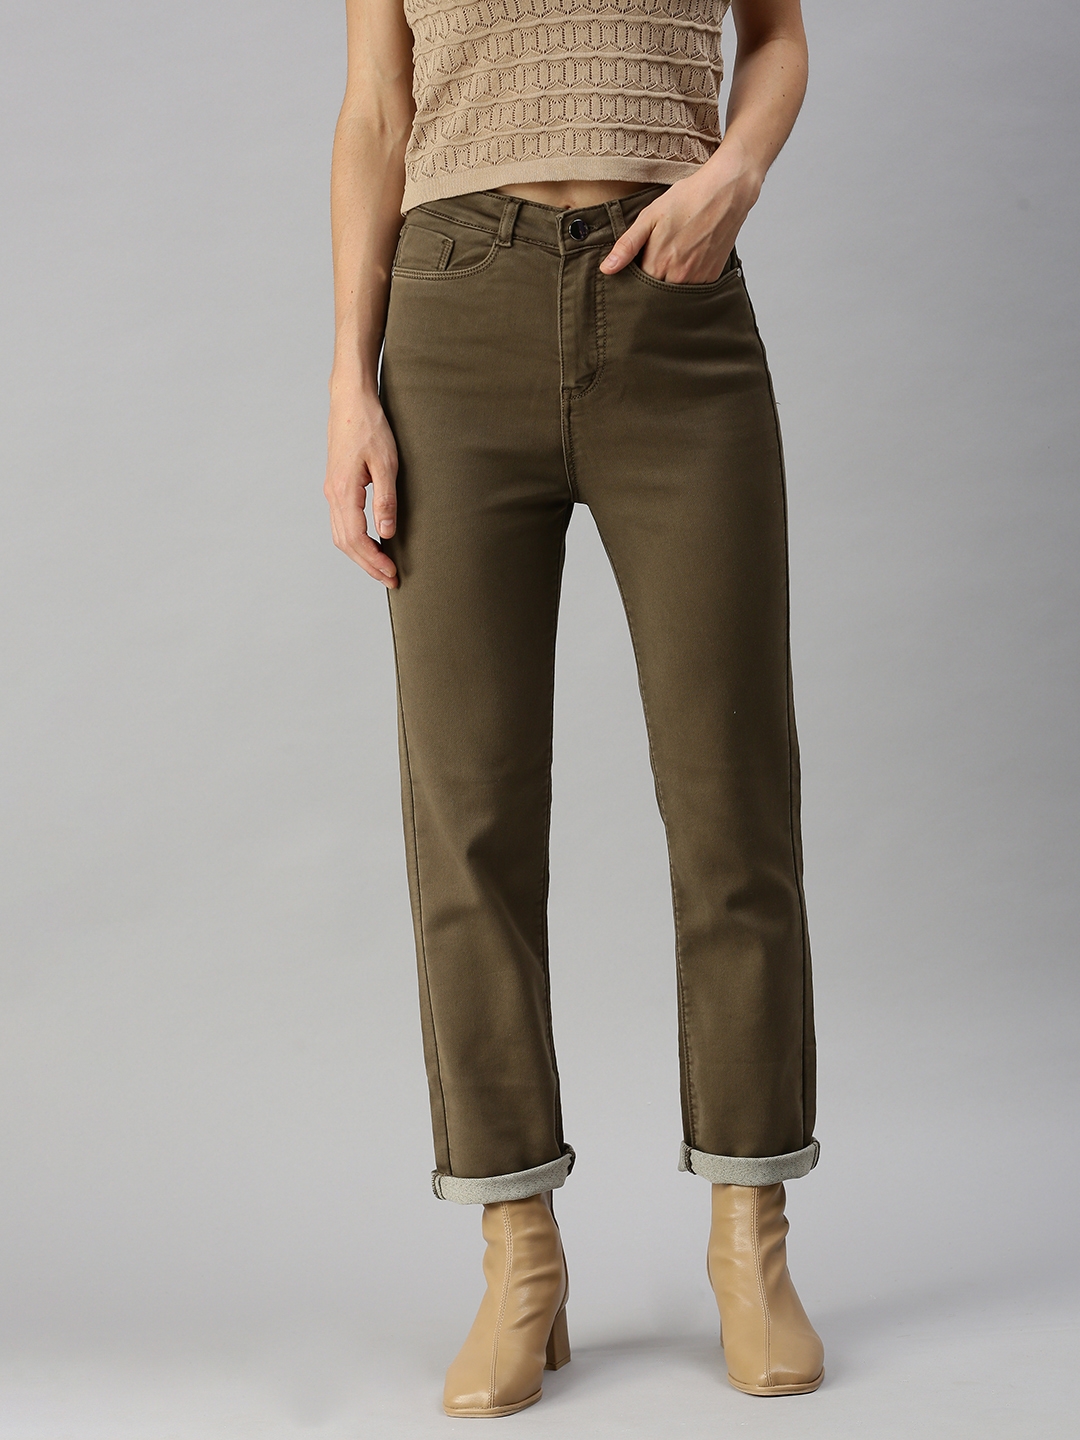 SHOWOFF Women's Clean Look Khaki Straight Fit Denim Jeans